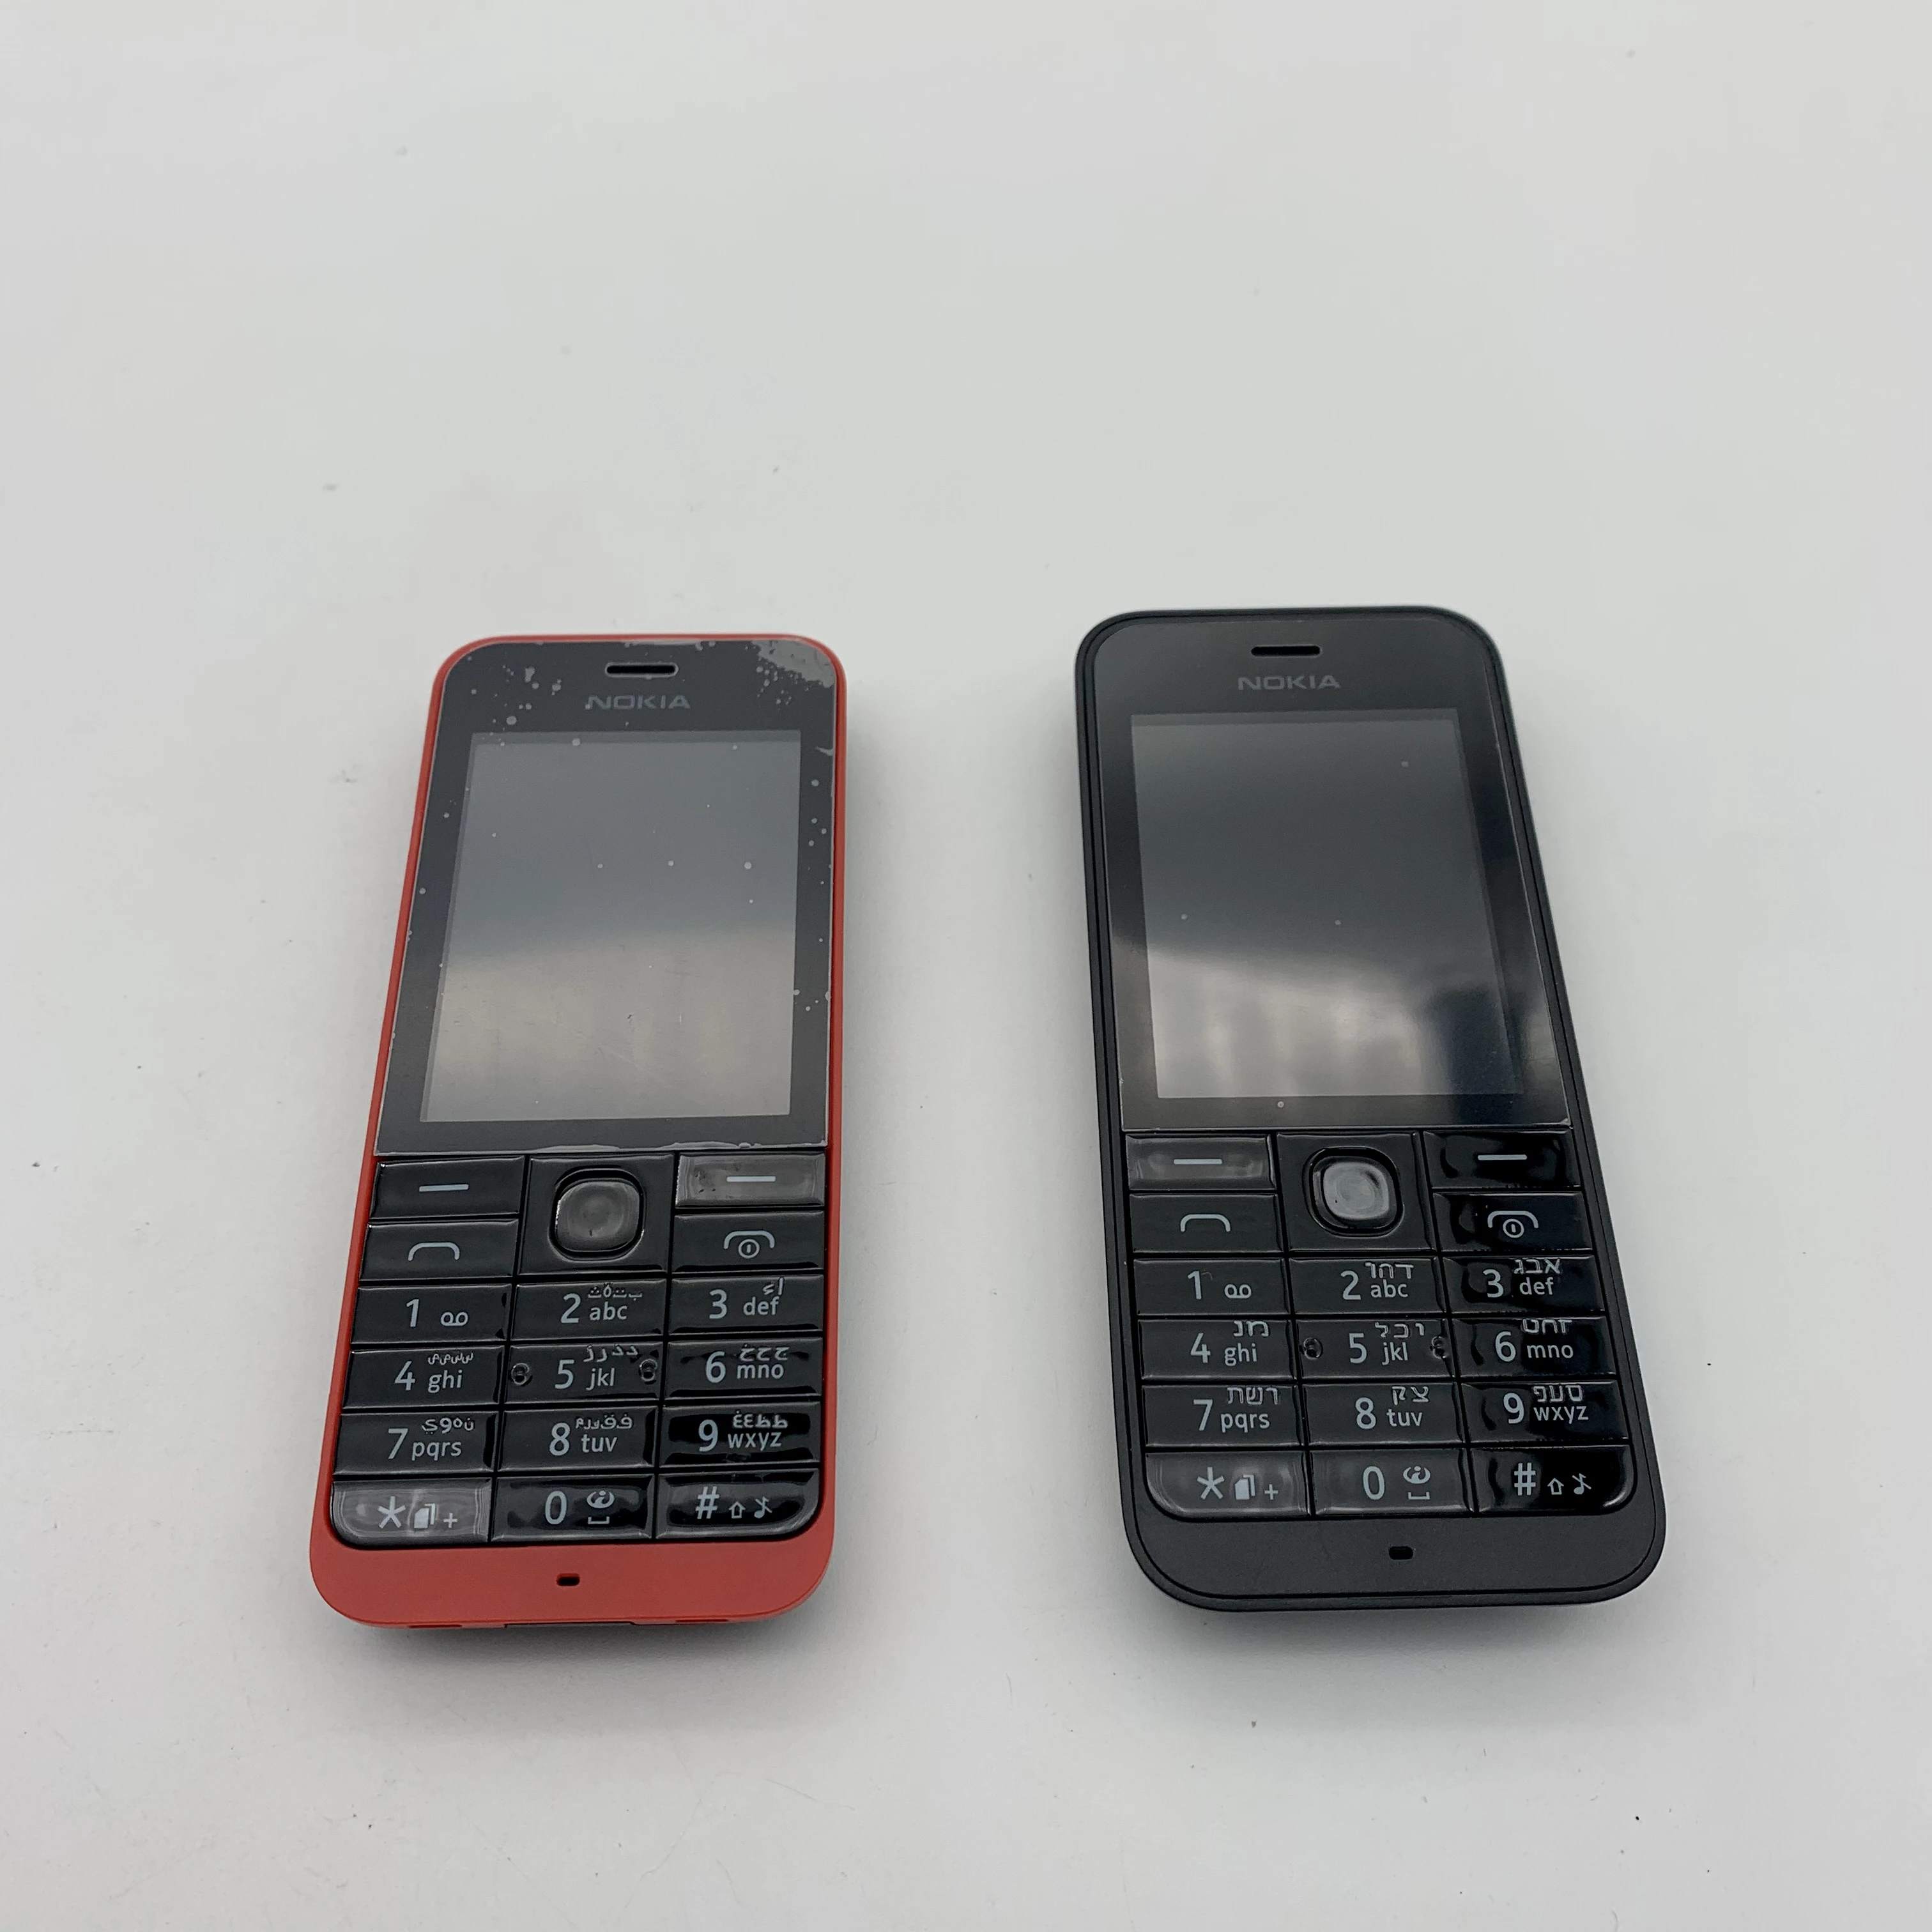 nokia 220（2014）refurbished original phones l nokia 220 dual sim card 2g gsm 1100mah unlocked cheap celluar phone refurbished free glo